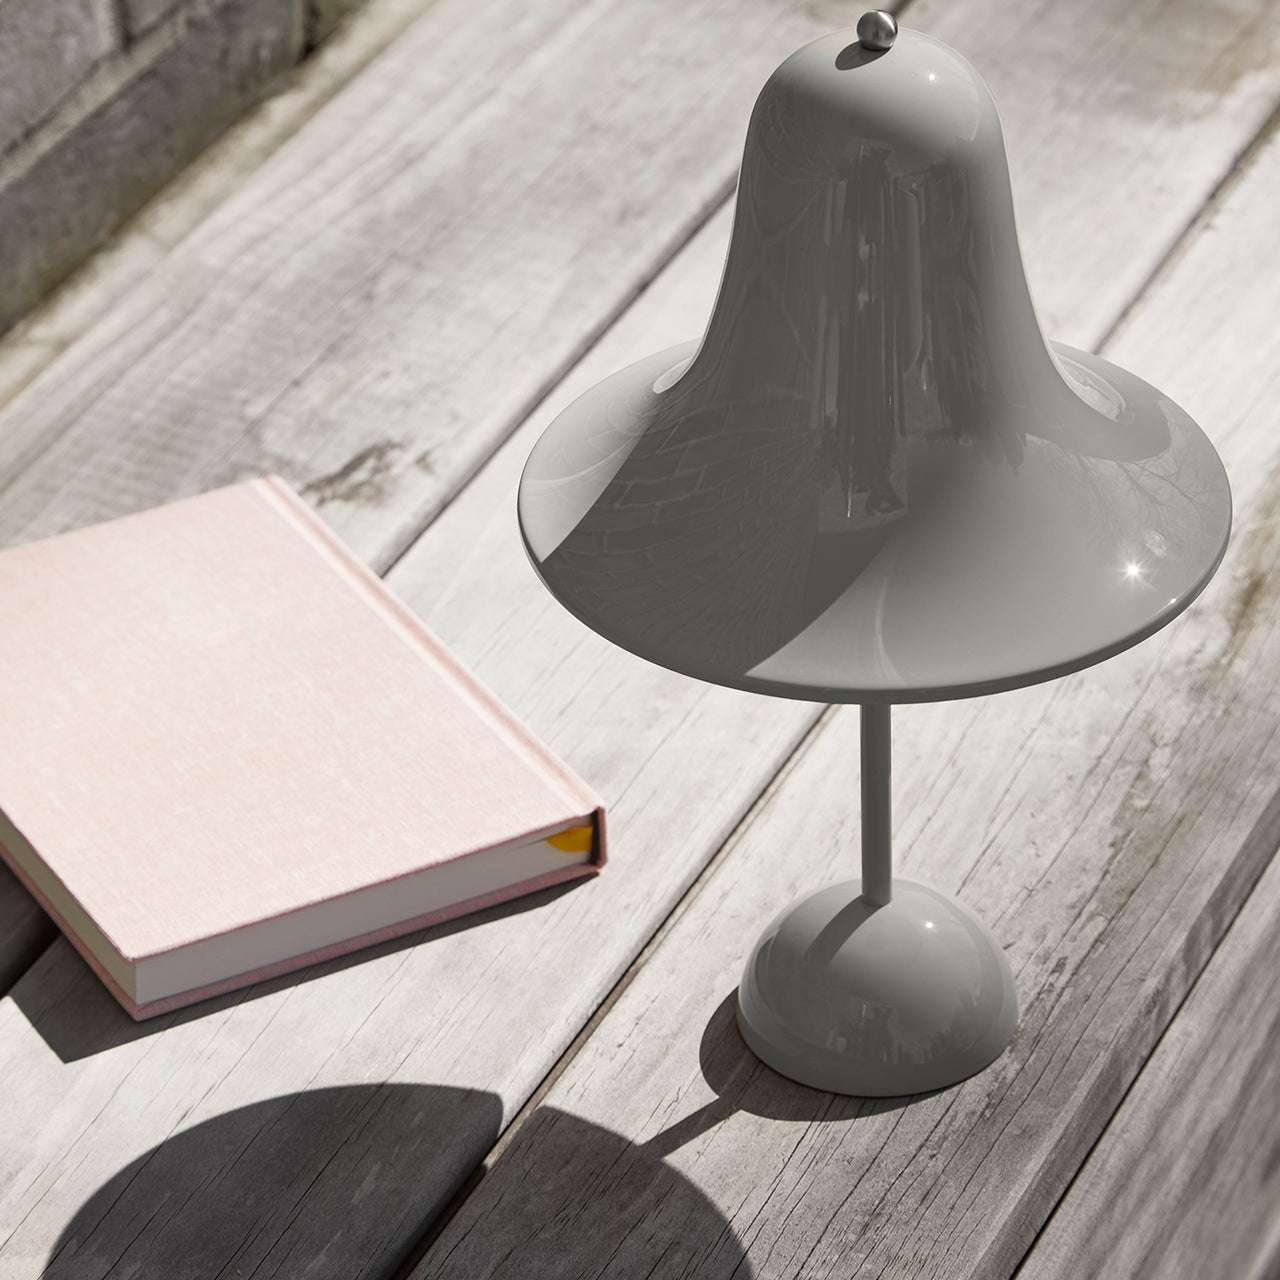 Pantop Portable Table Lamp | Buy Verpan online at A+R